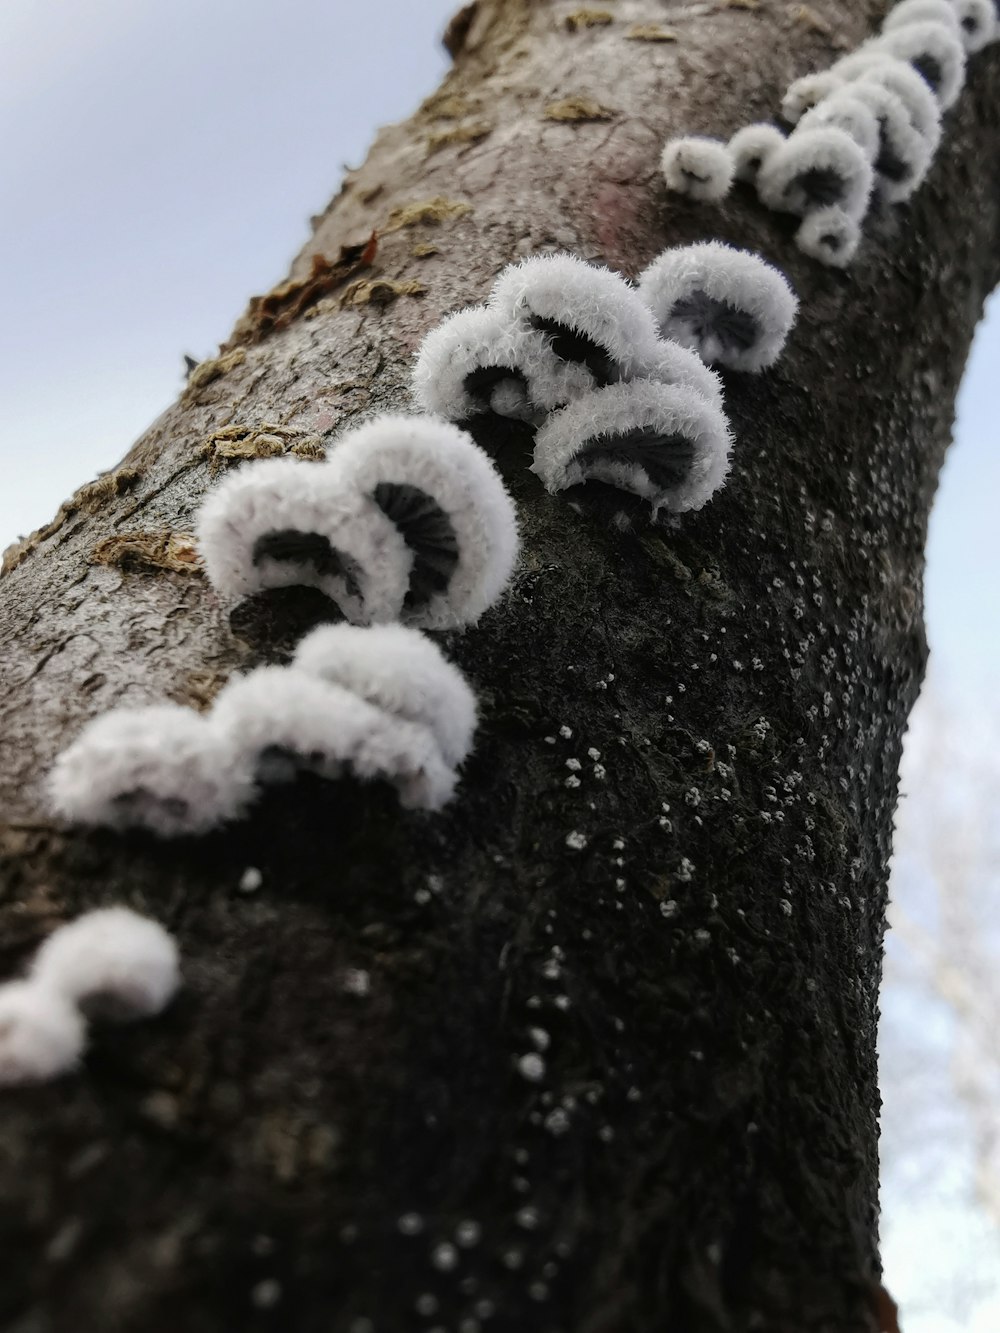 white fur on brown tree trunk